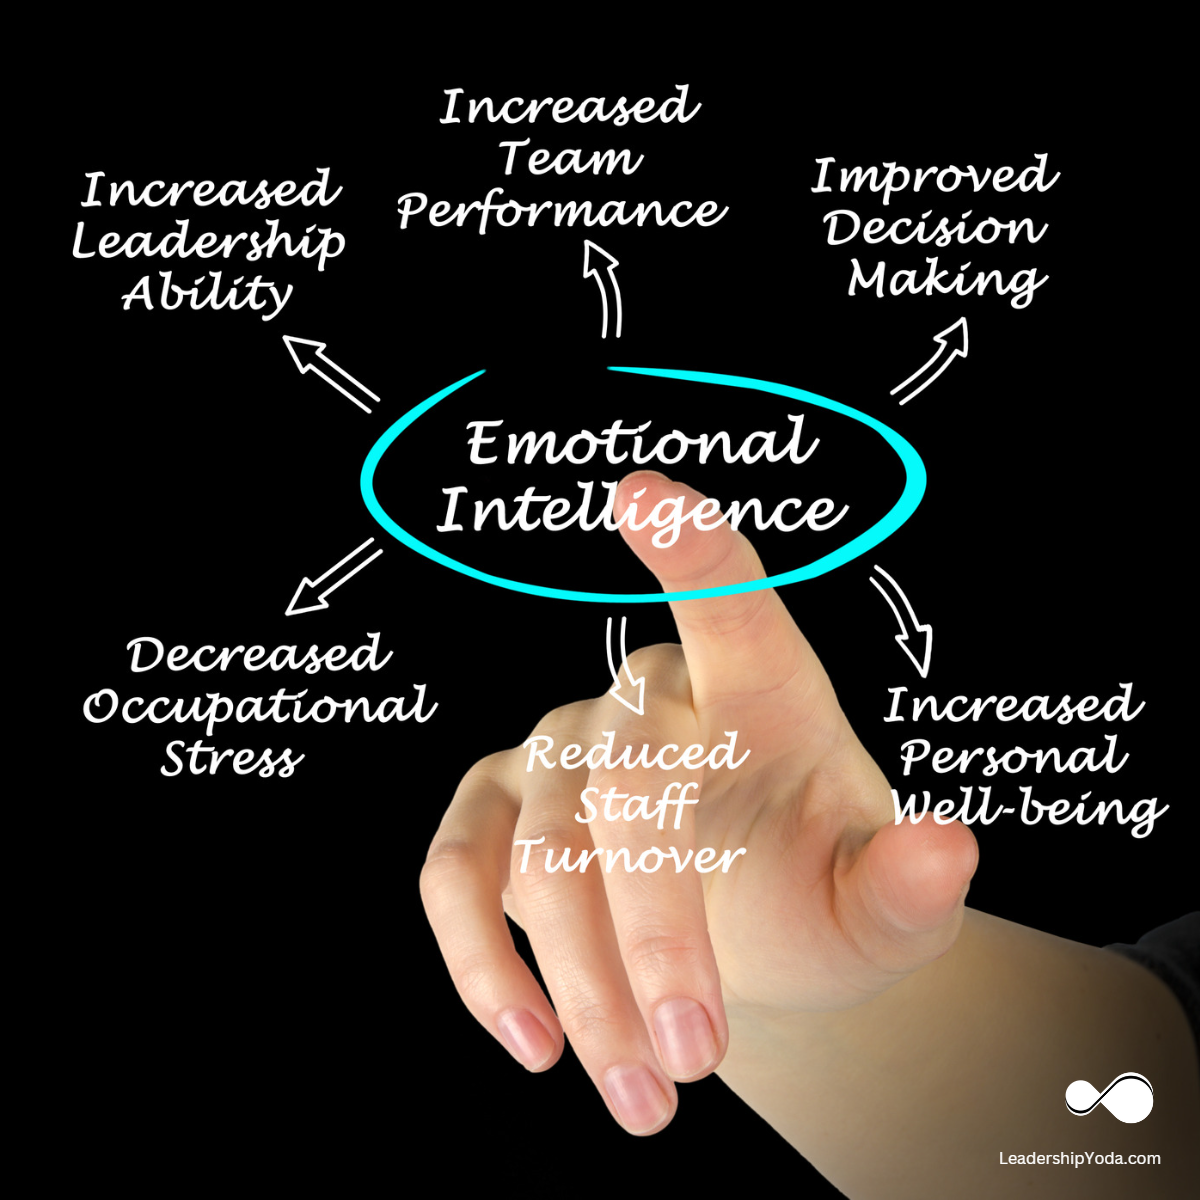 Understanding emotions using the Wheel of emotions - LeadershipYoda